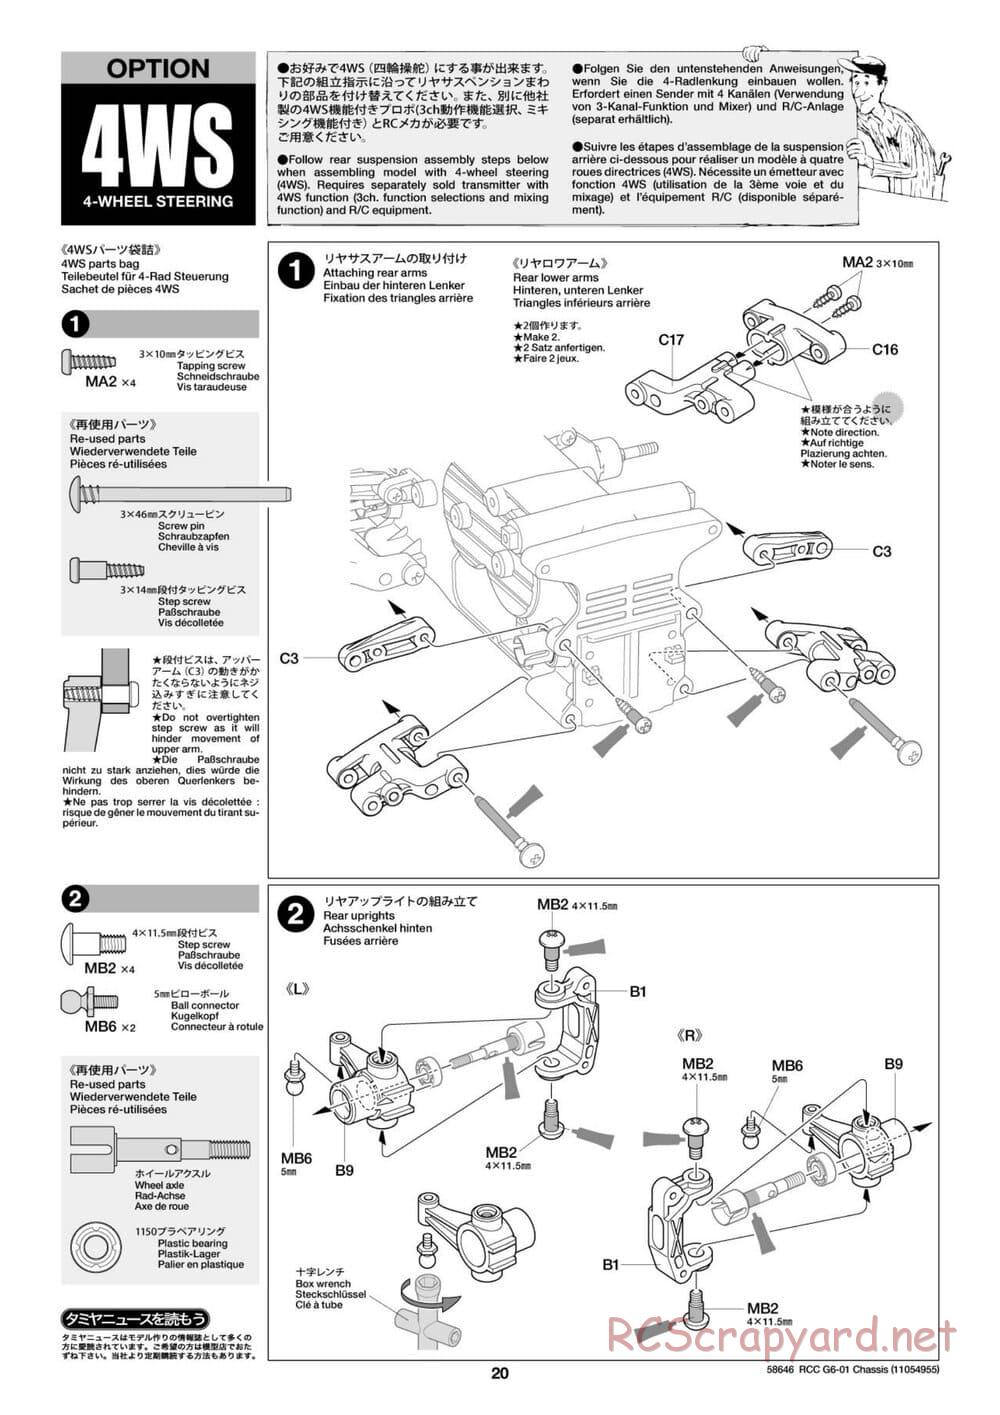 Tamiya - Konghead 6x6 - G6-01 Chassis - Manual - Page 20